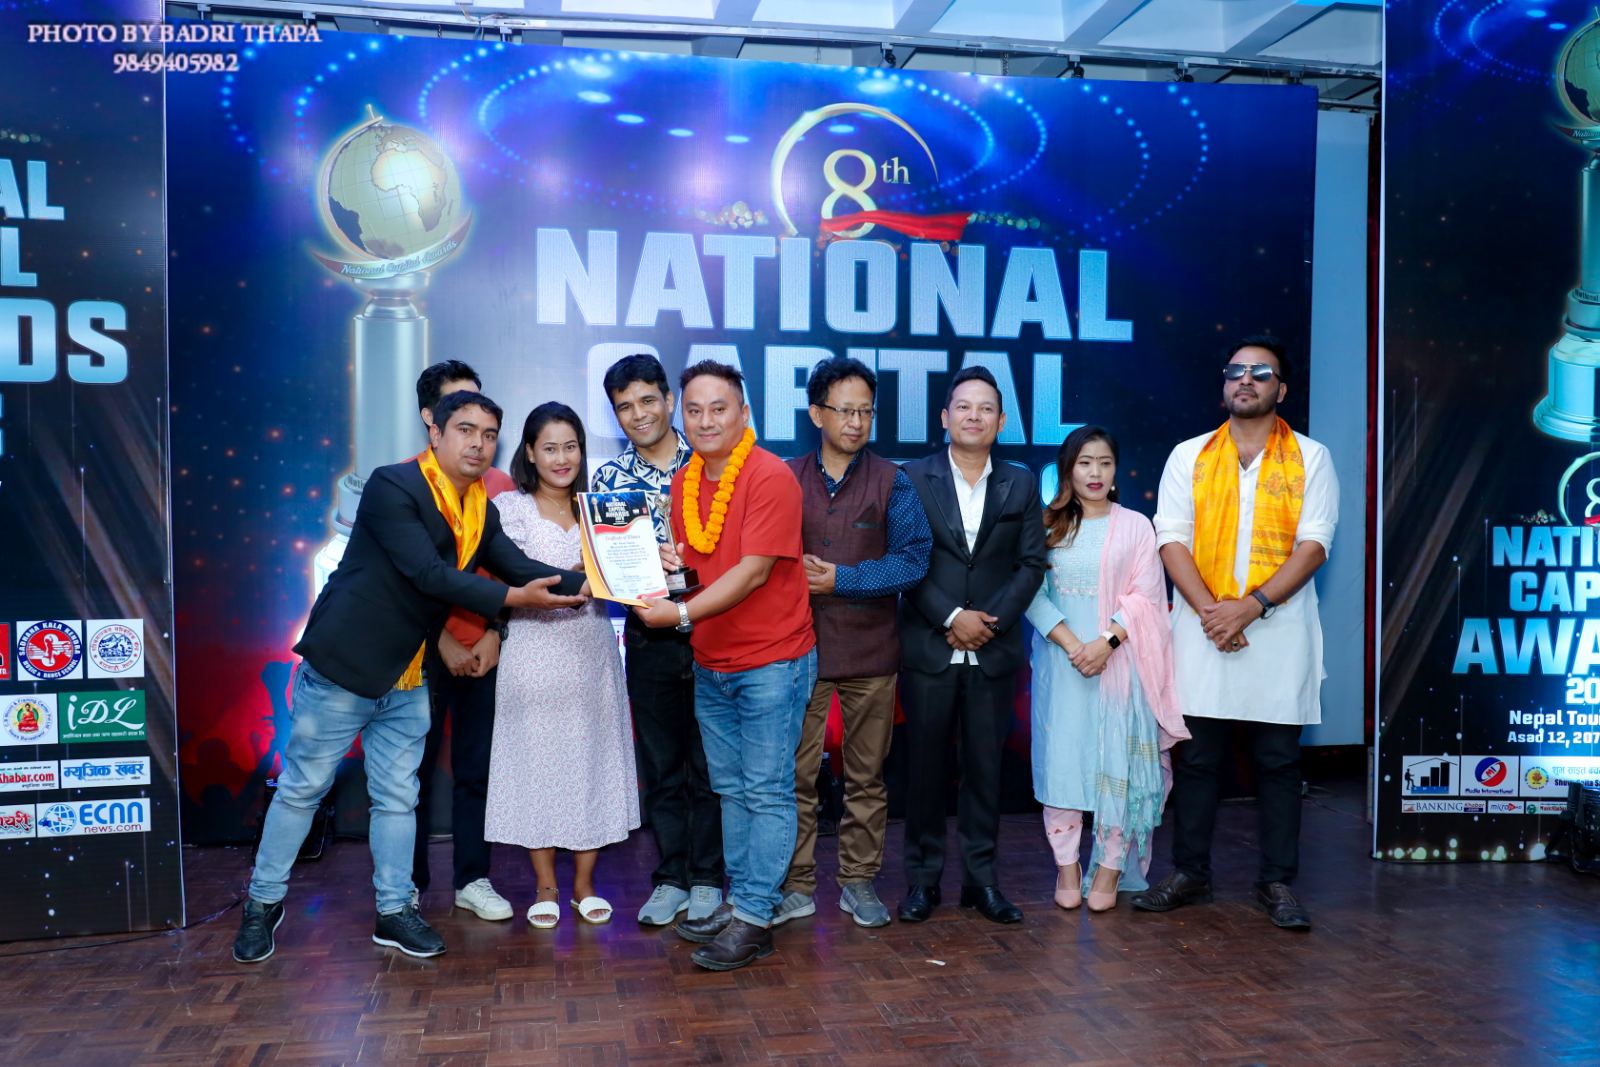 8th National Capital Awards 2078